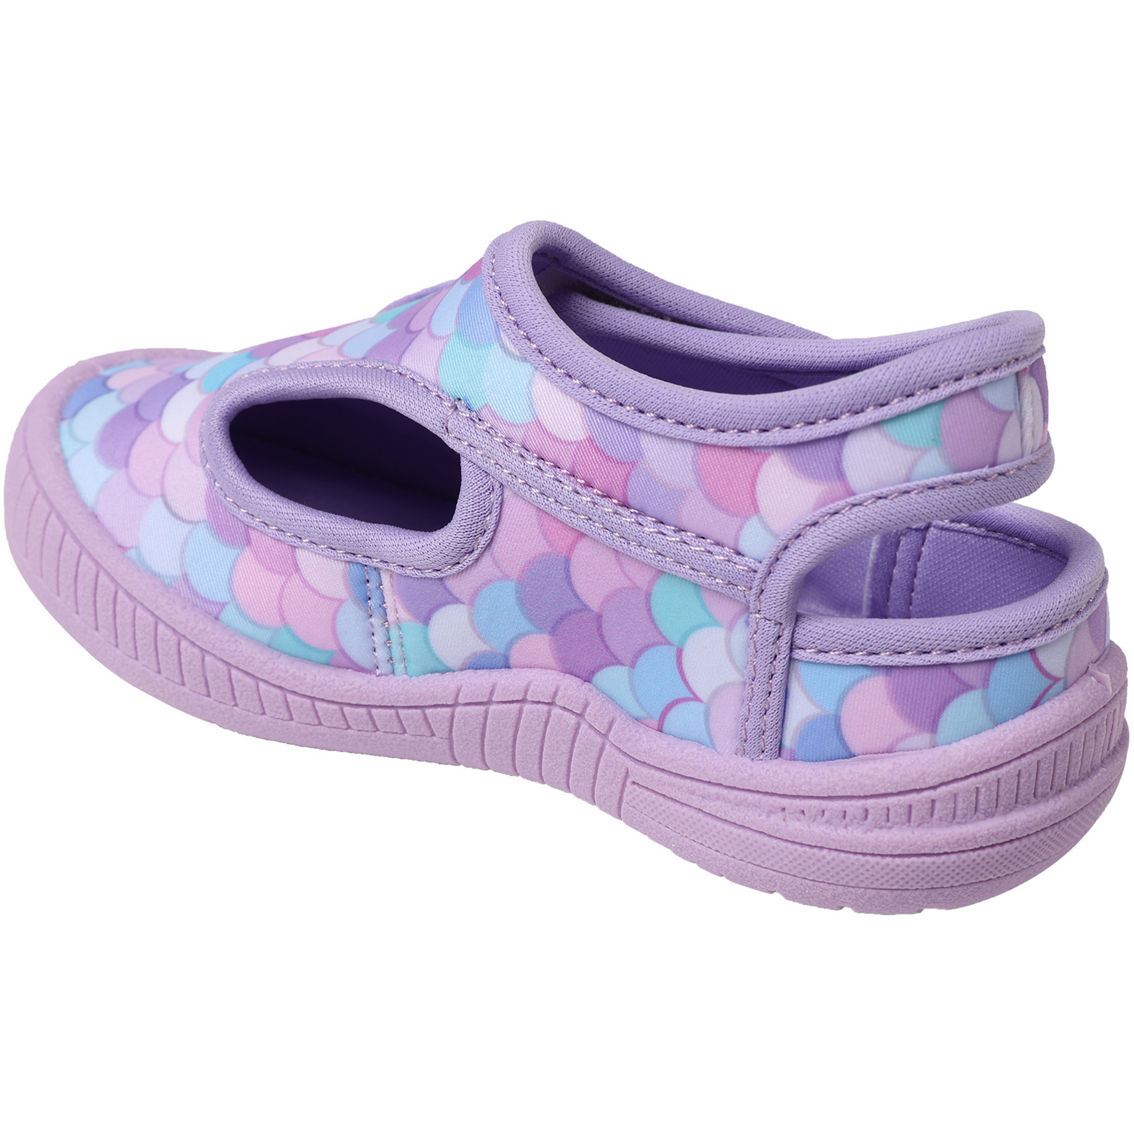 Oomphies Toddler Girls Splash Sandals - Image 3 of 4